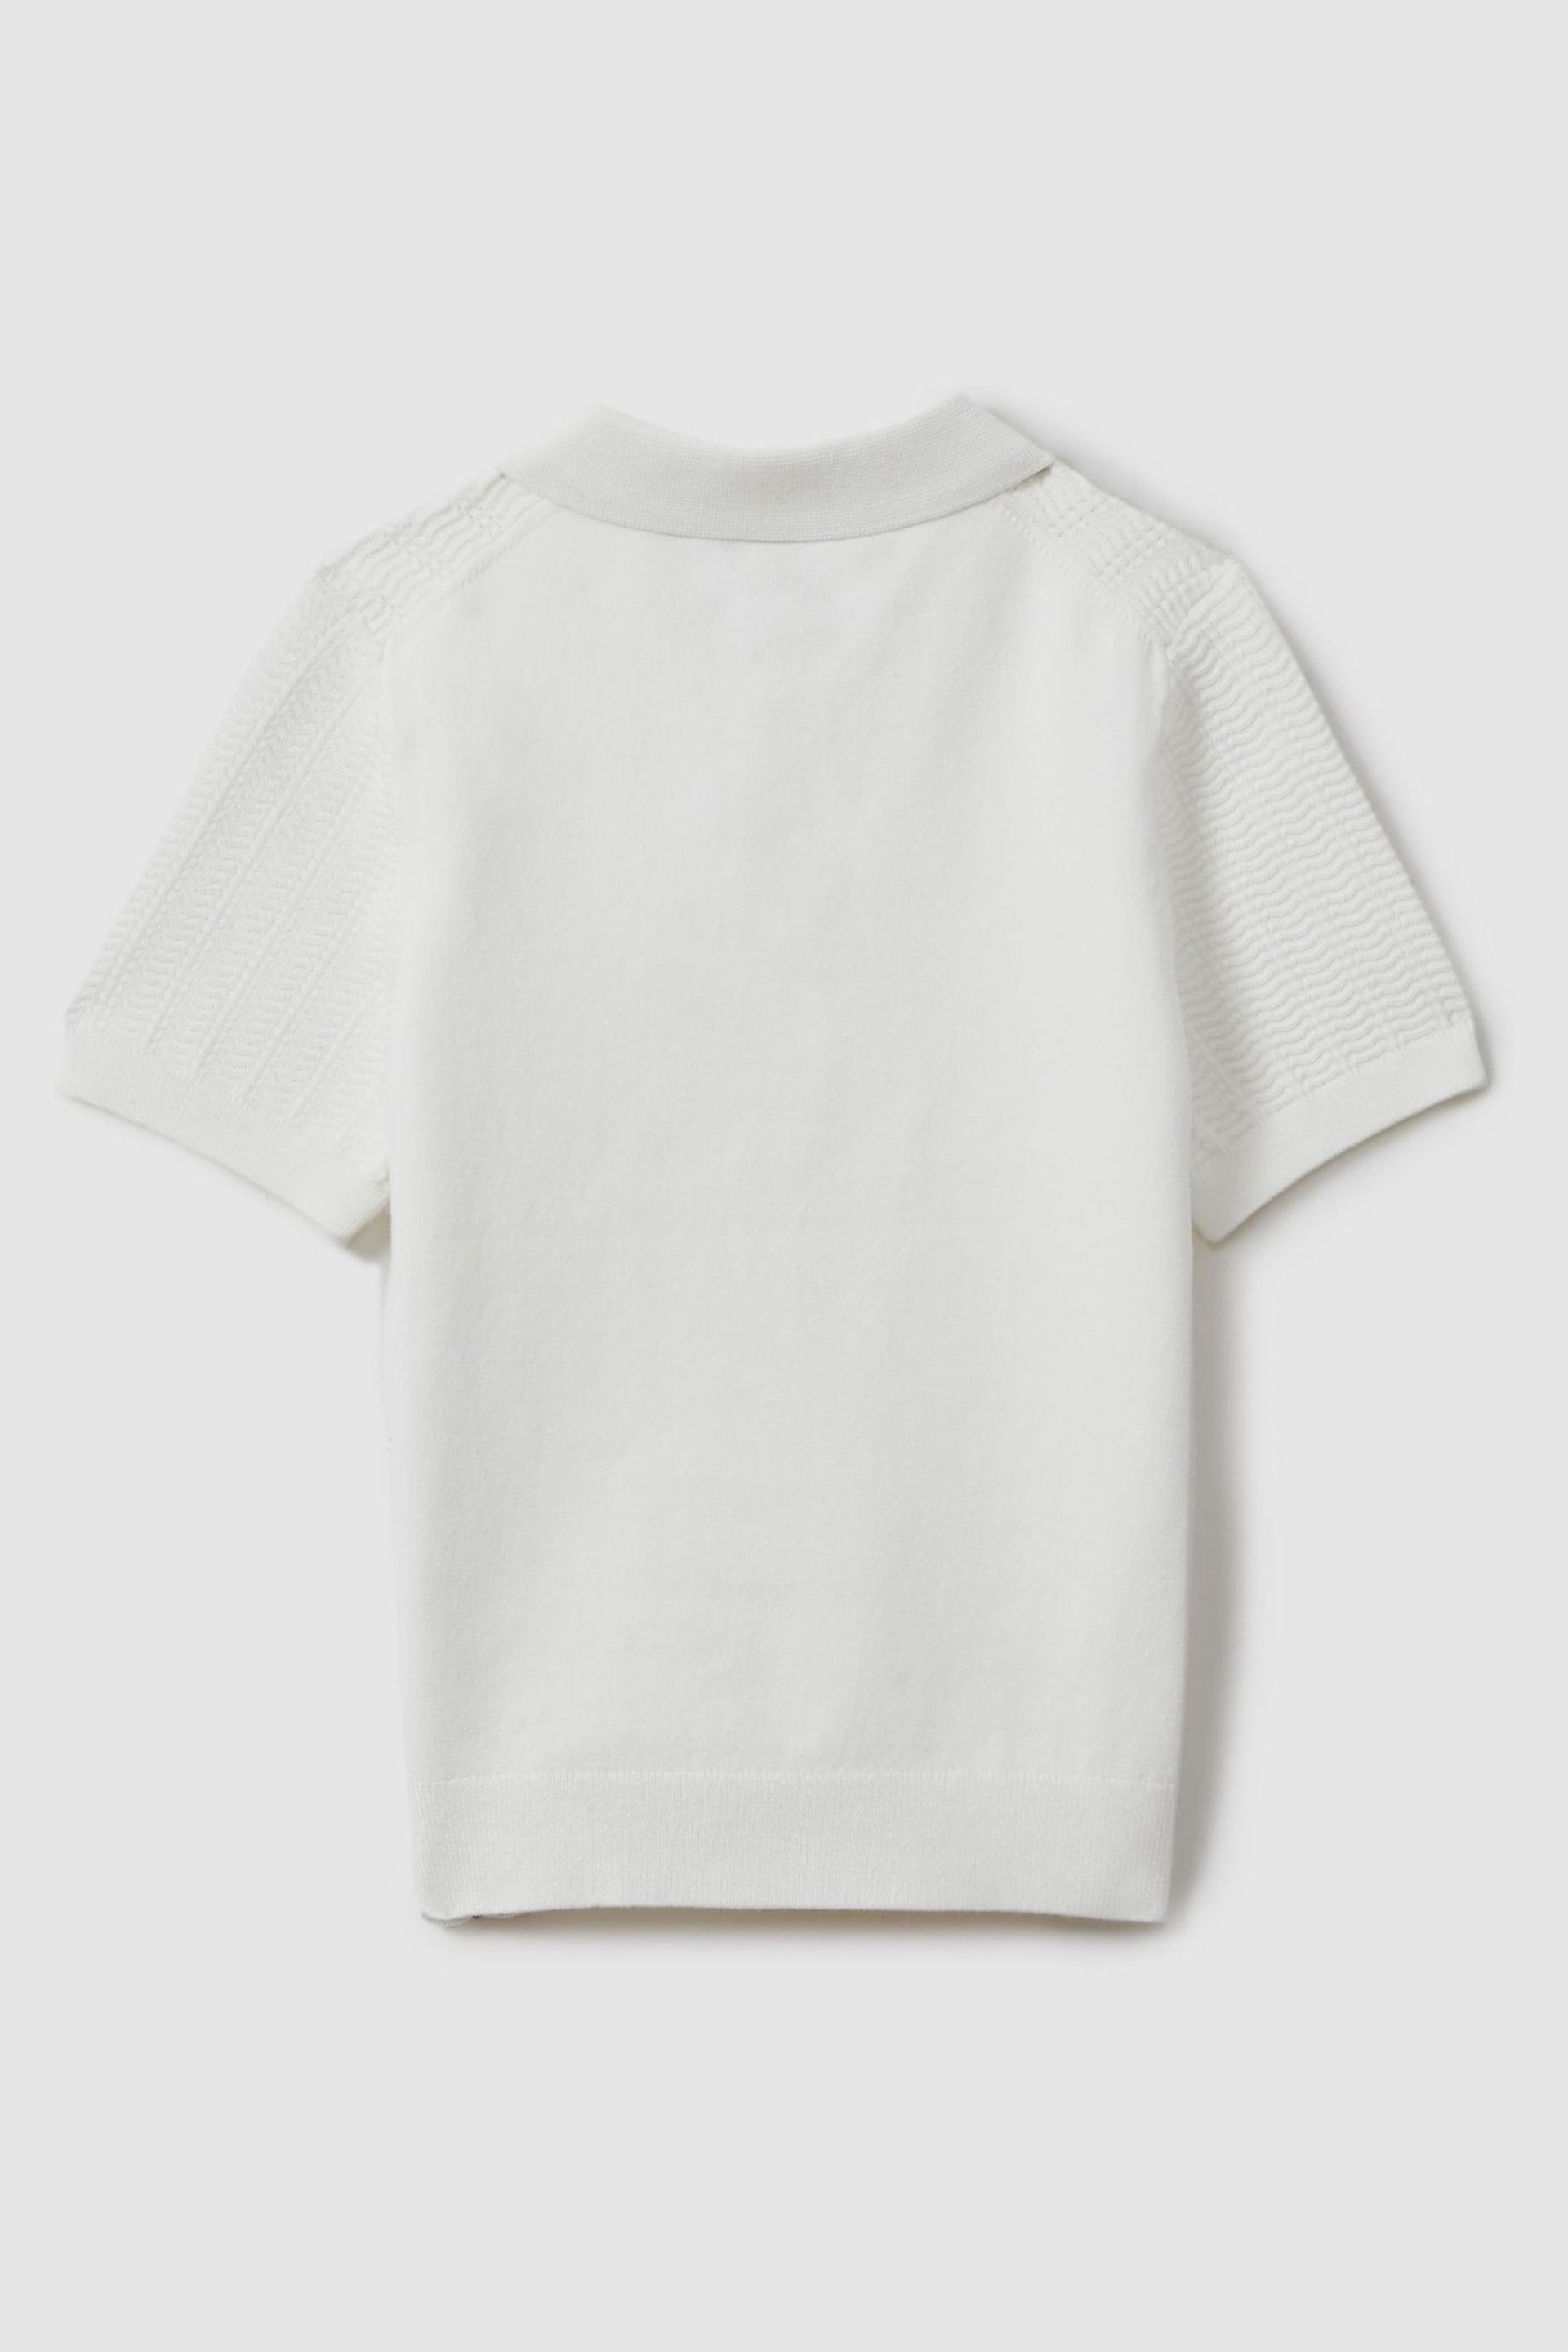 Reiss White Pascoe Junior Textured Modal Blend Polo Shirt - Image 2 of 3